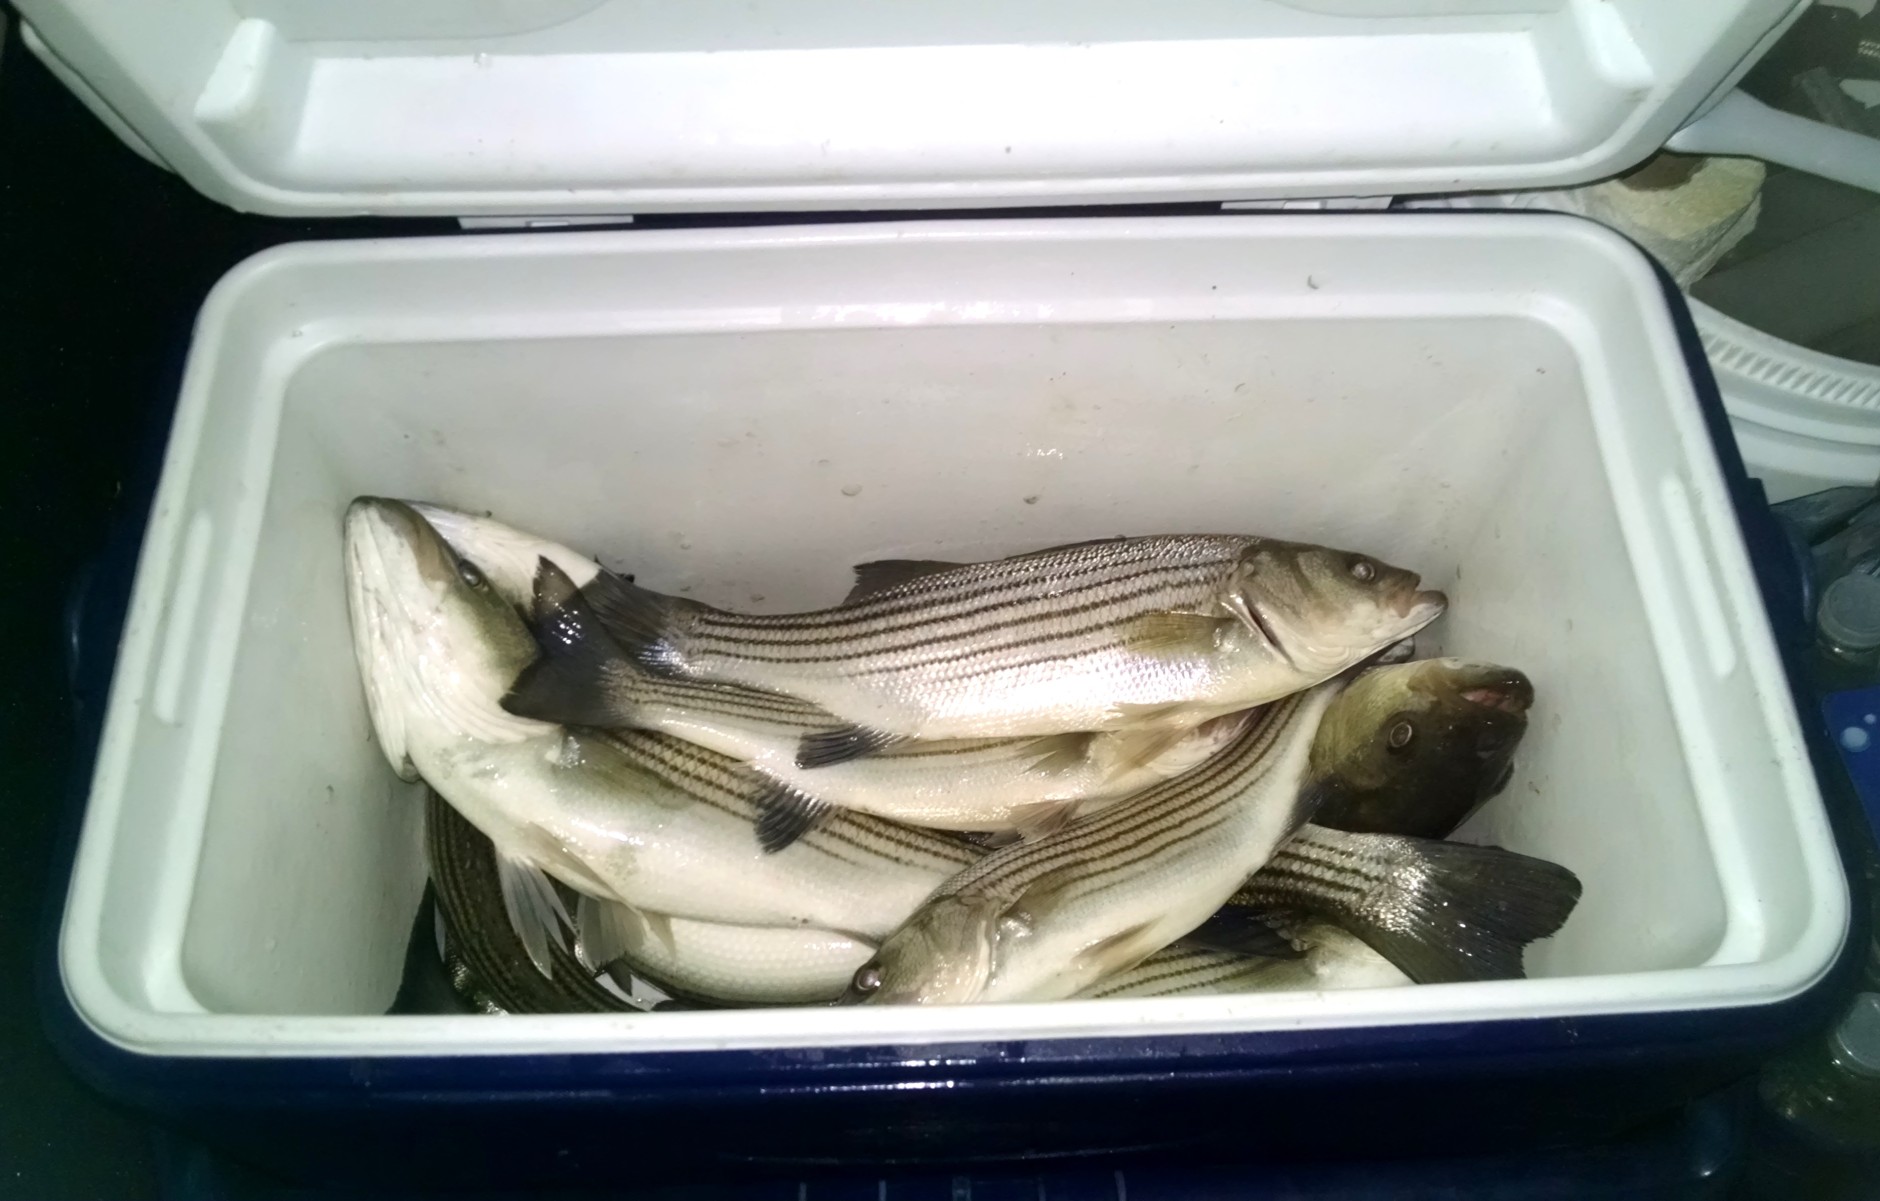 Maryland opens rockfish season with new regulations WTOP News